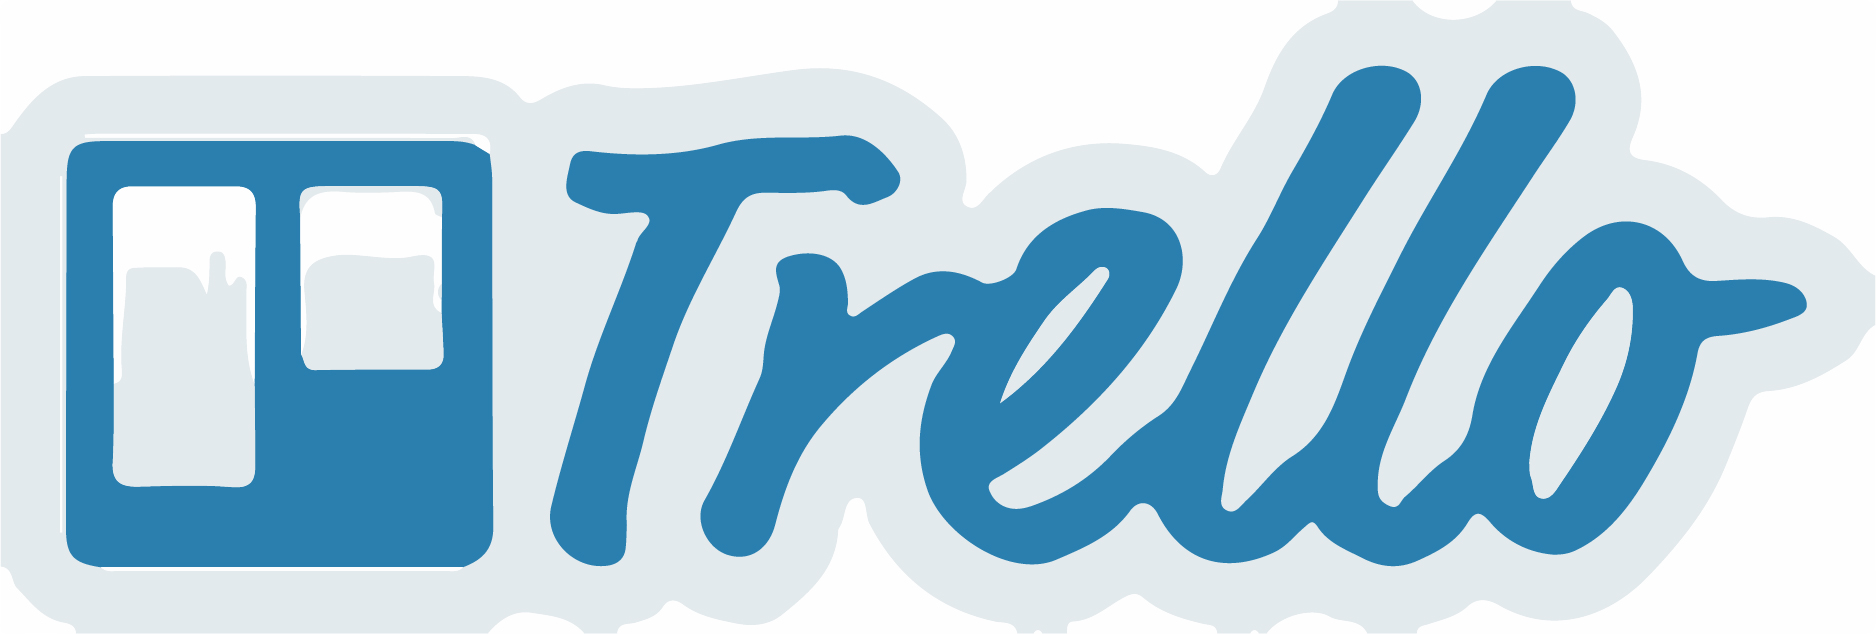 File:Trello logo.jpg - Wikimedia Commons